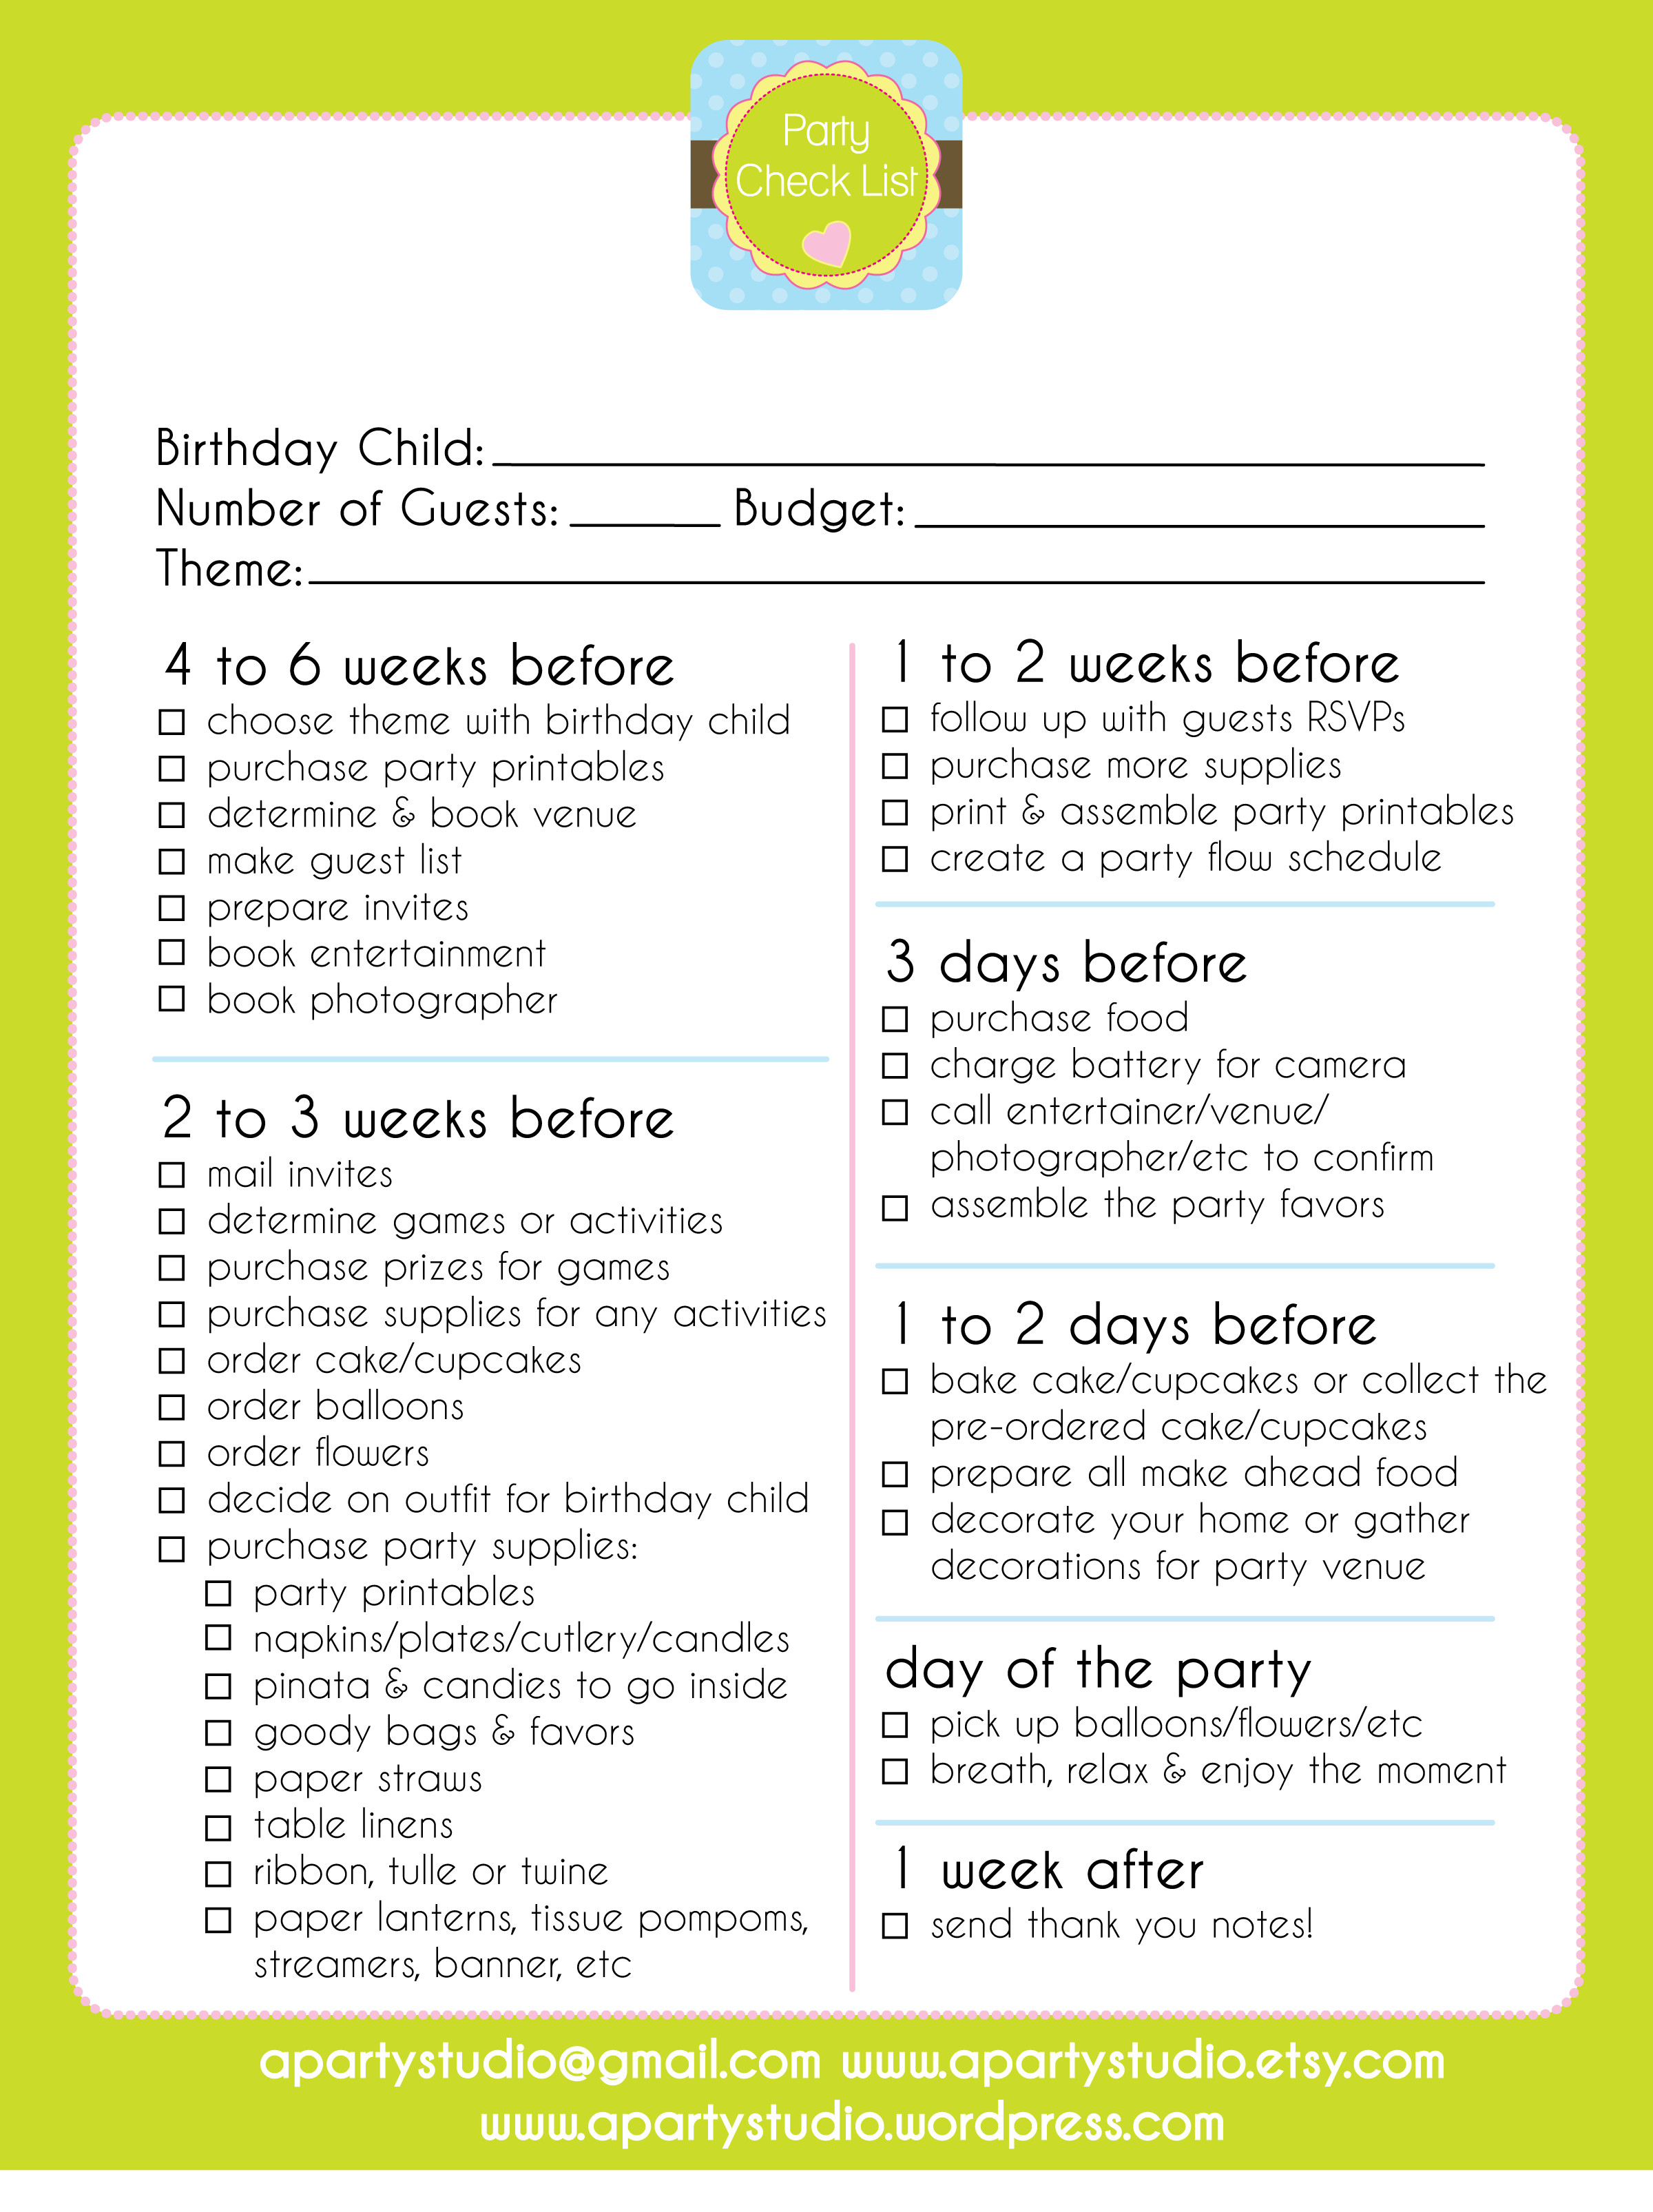 Birthday Party Planning Checklist
 FREE Printable Party Checklist